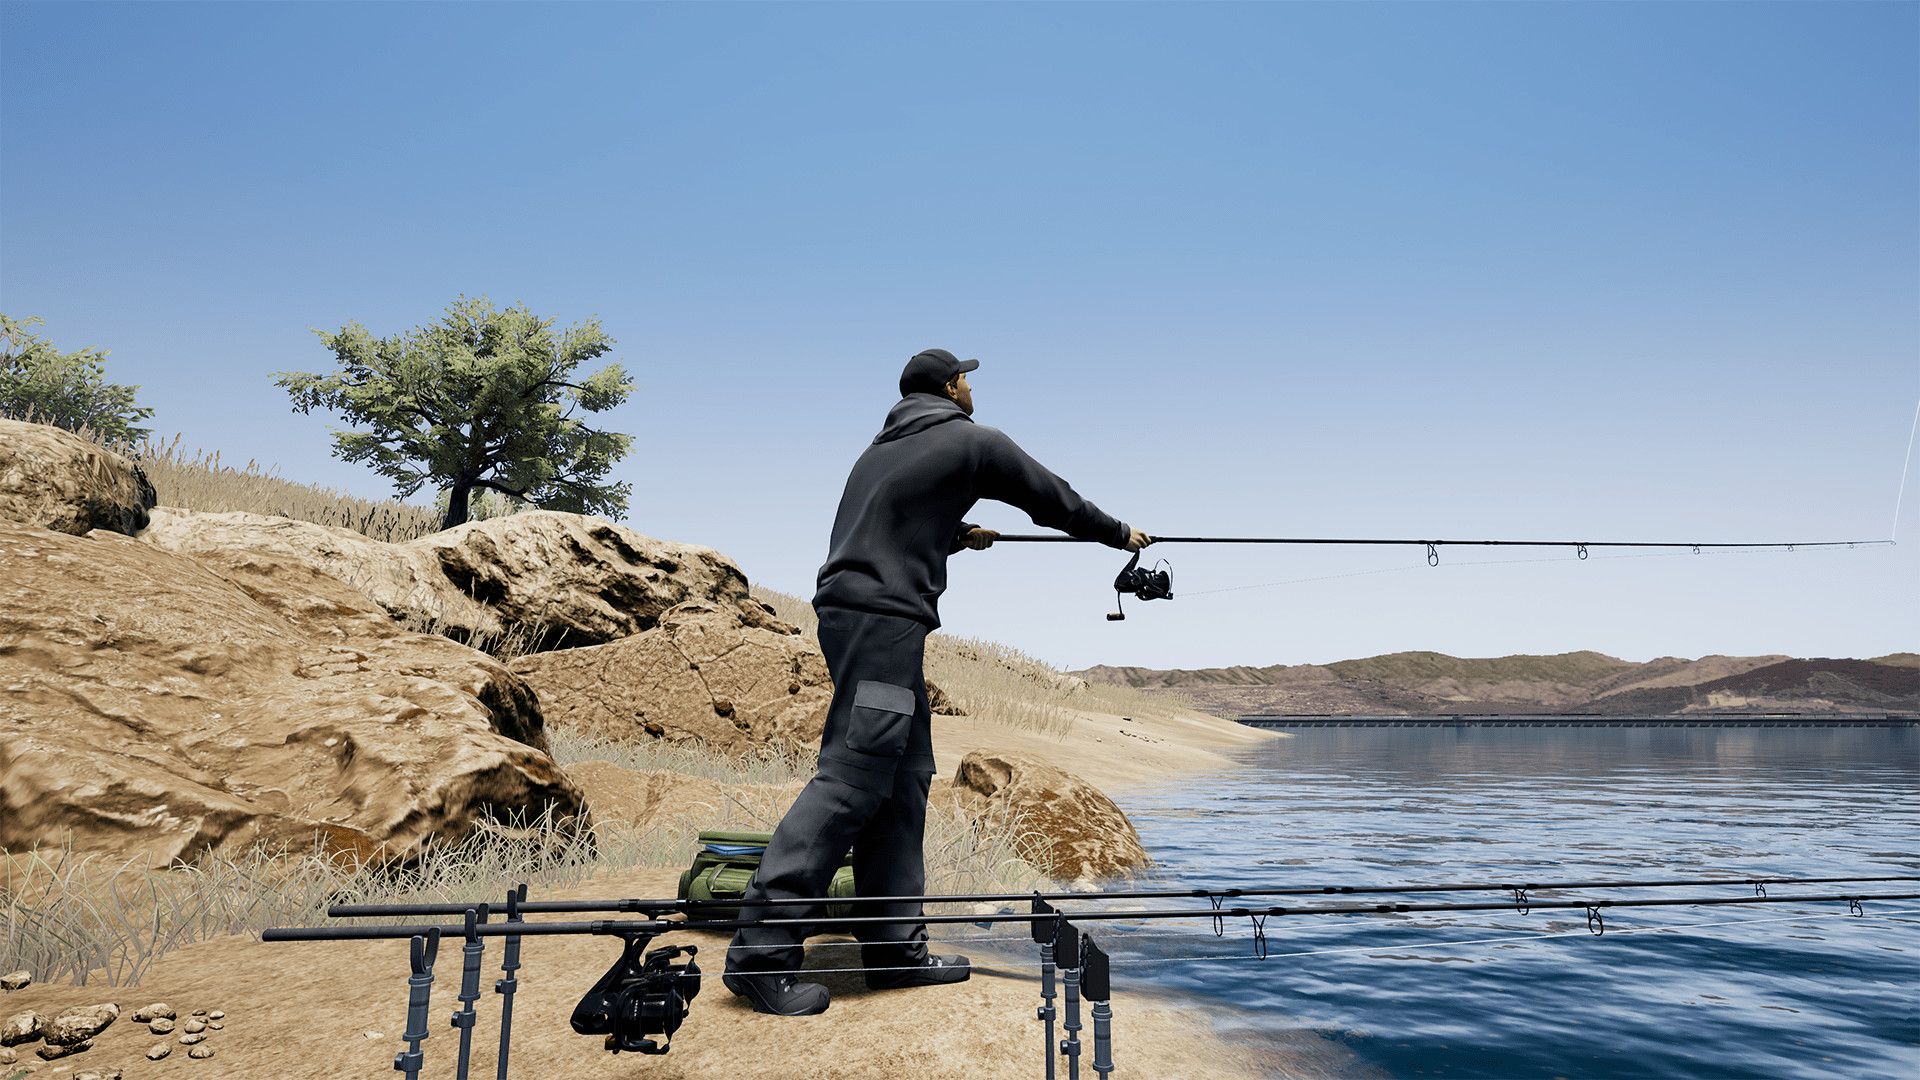 Fishing Sim World: Pro Tour - Lago Del Mundo